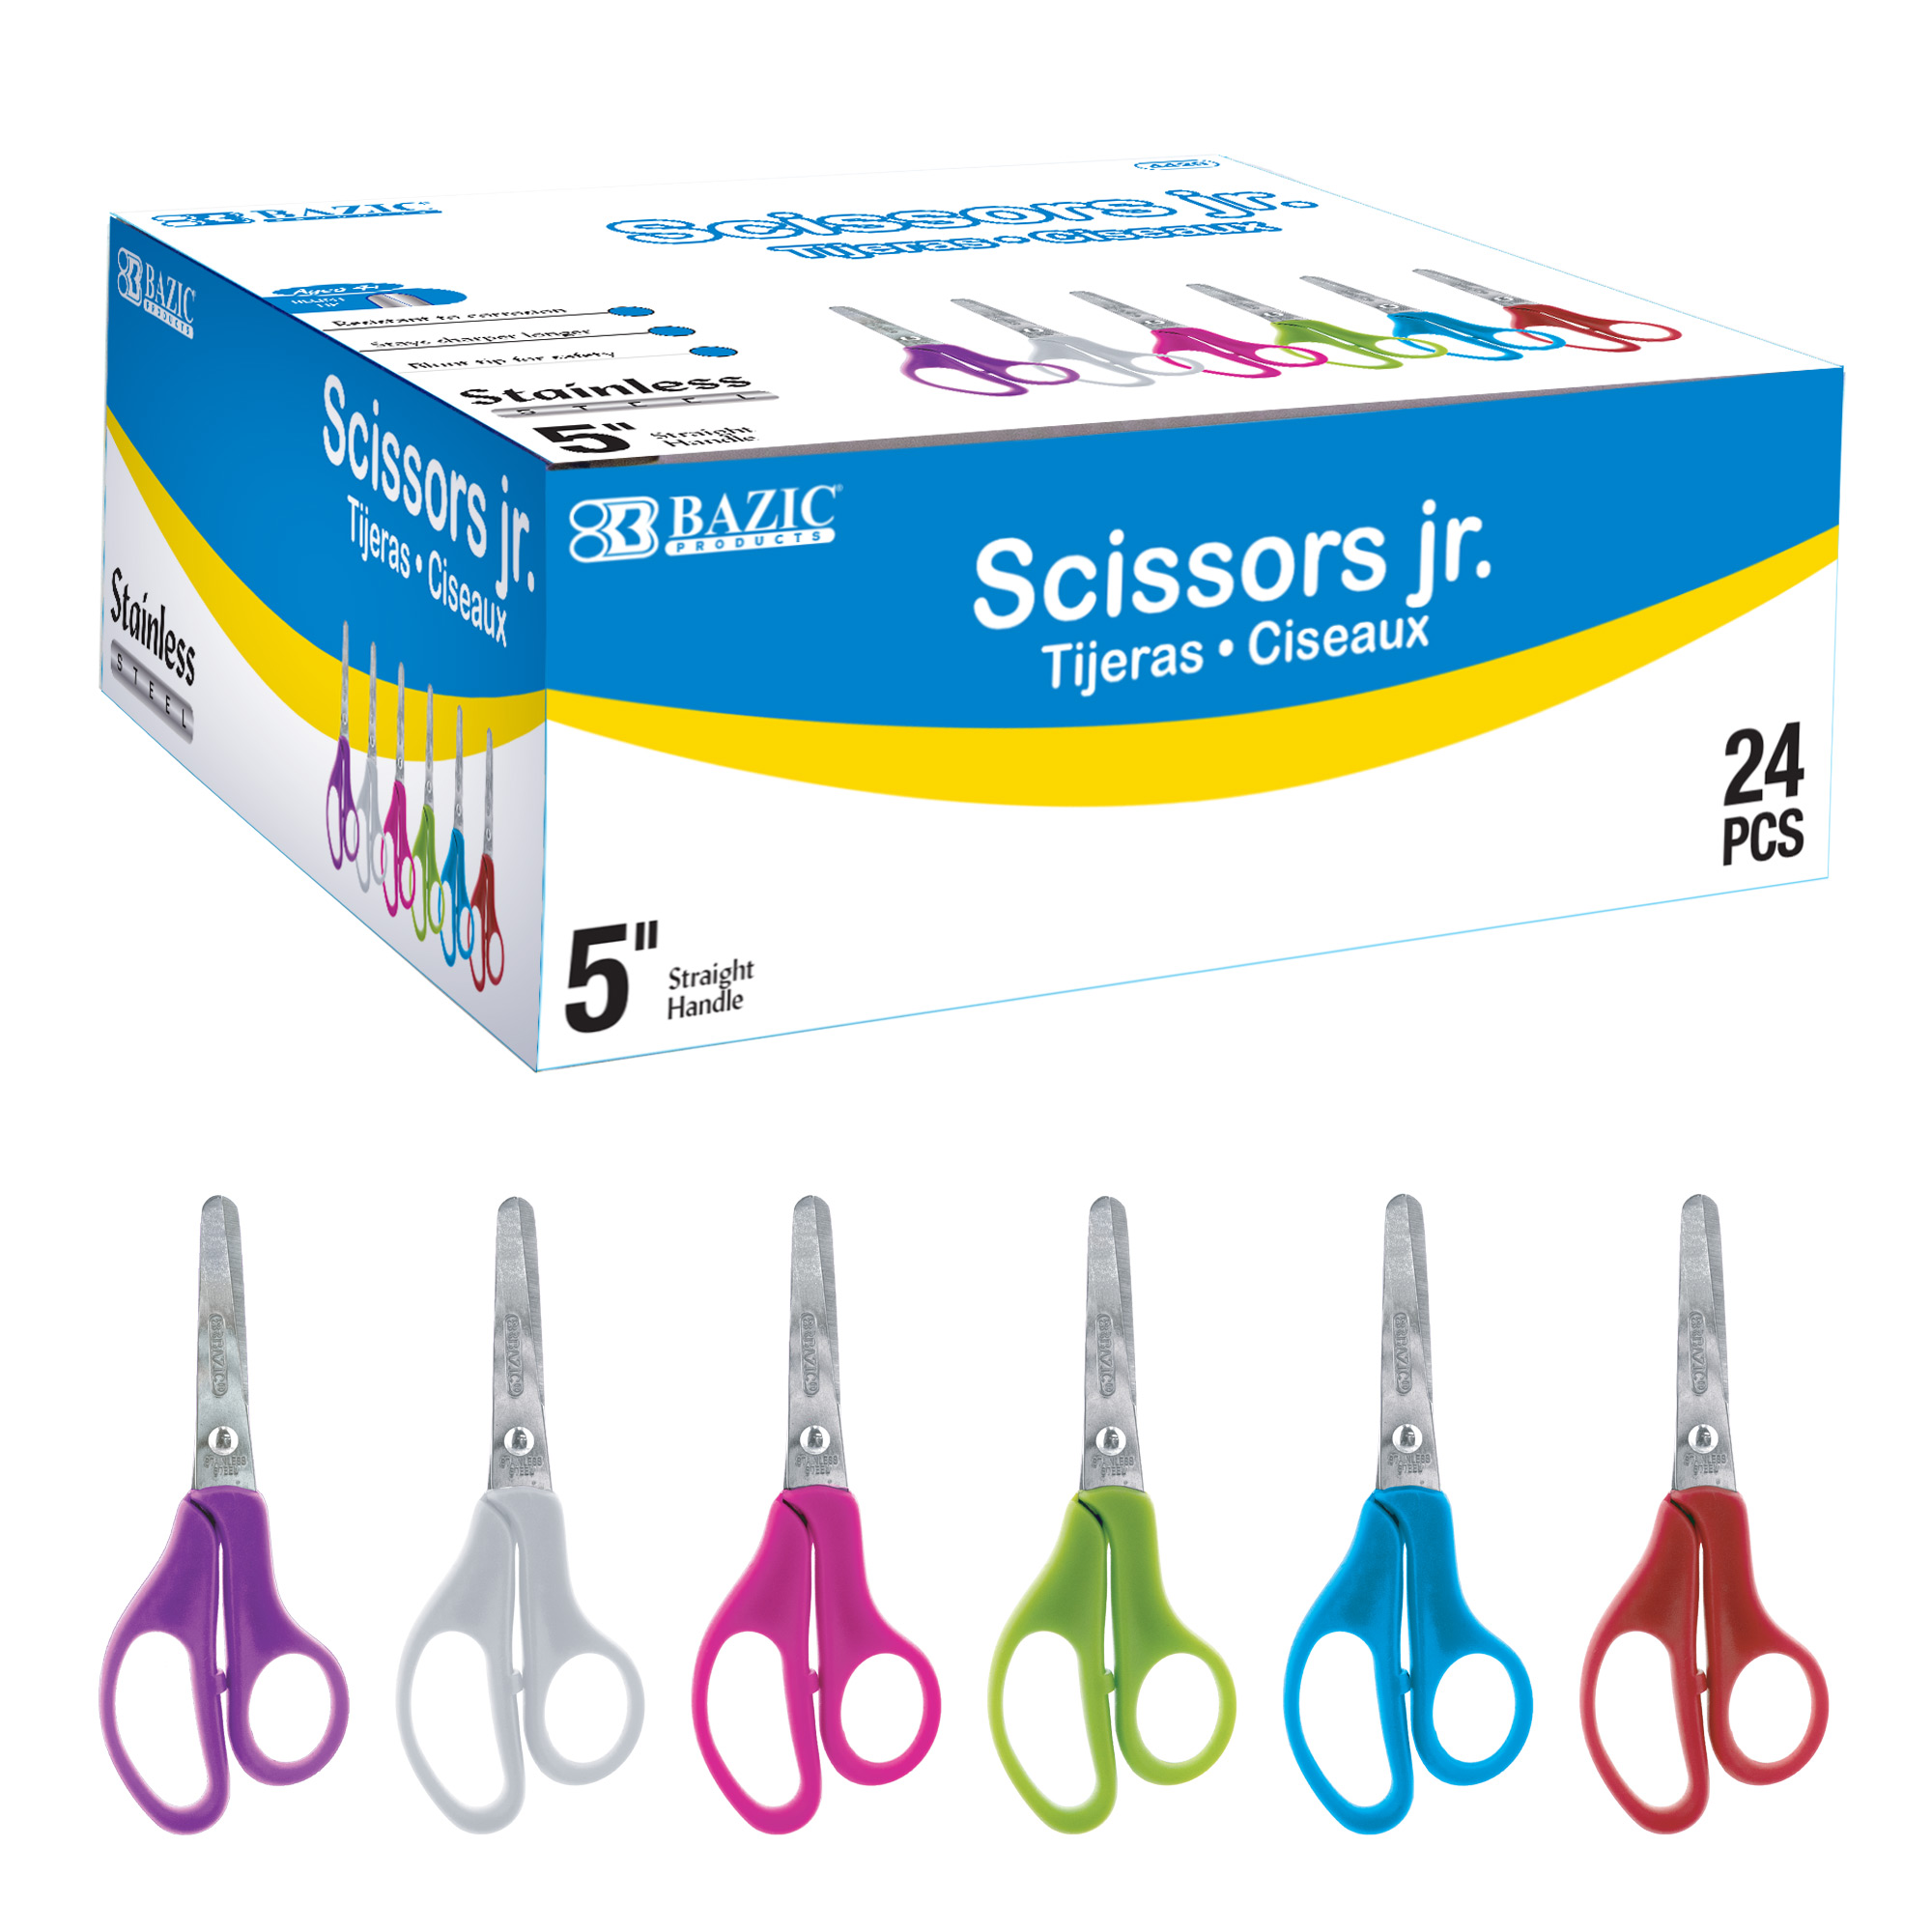 5 Blunt Tip School Scissors (BULK) 1 pack 24 scissors - 224188